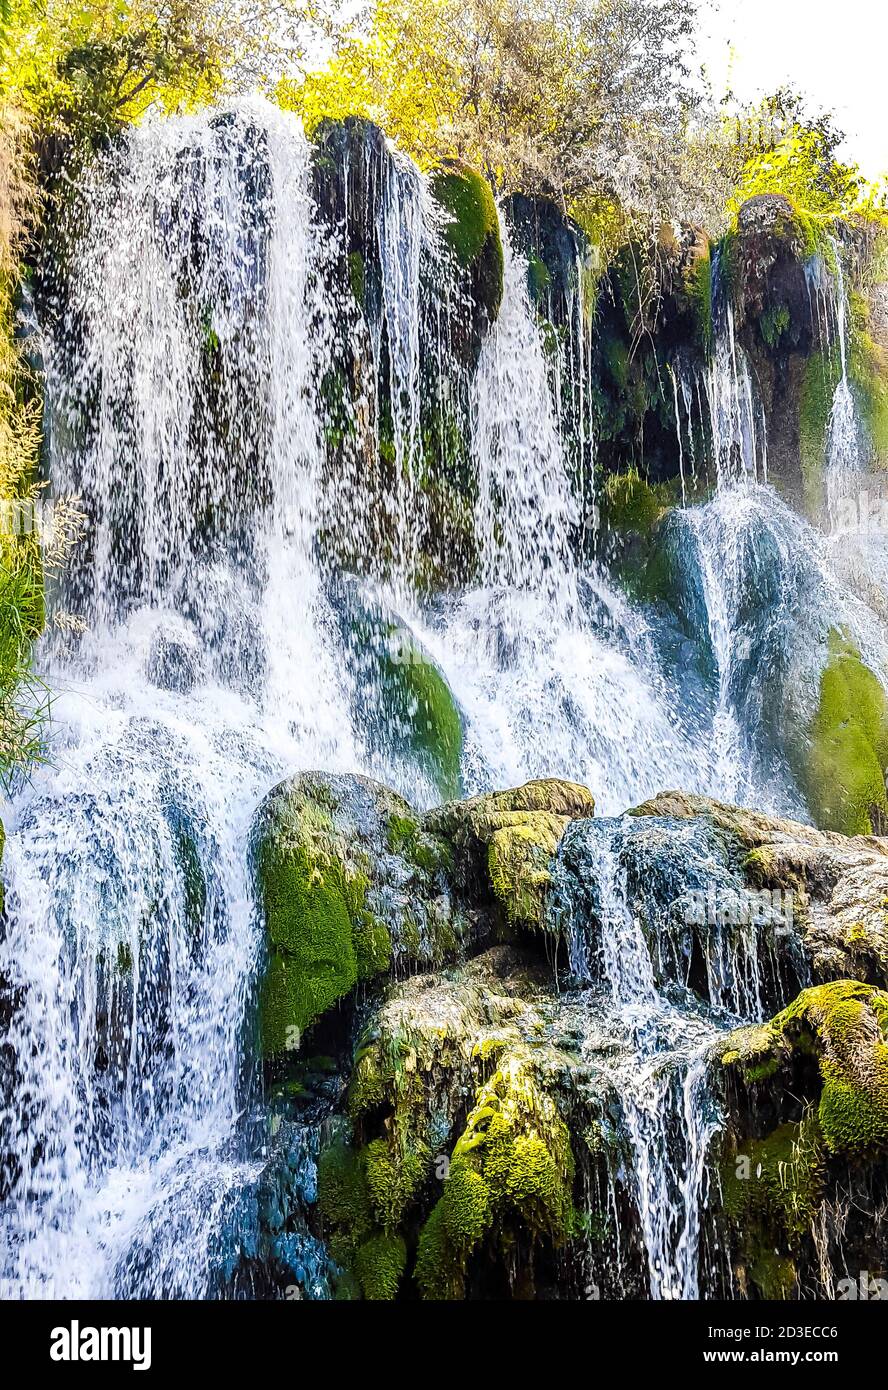 Kravice waterfall on the Trebizat River in Bosnia and Herzegovina. Stock Photo